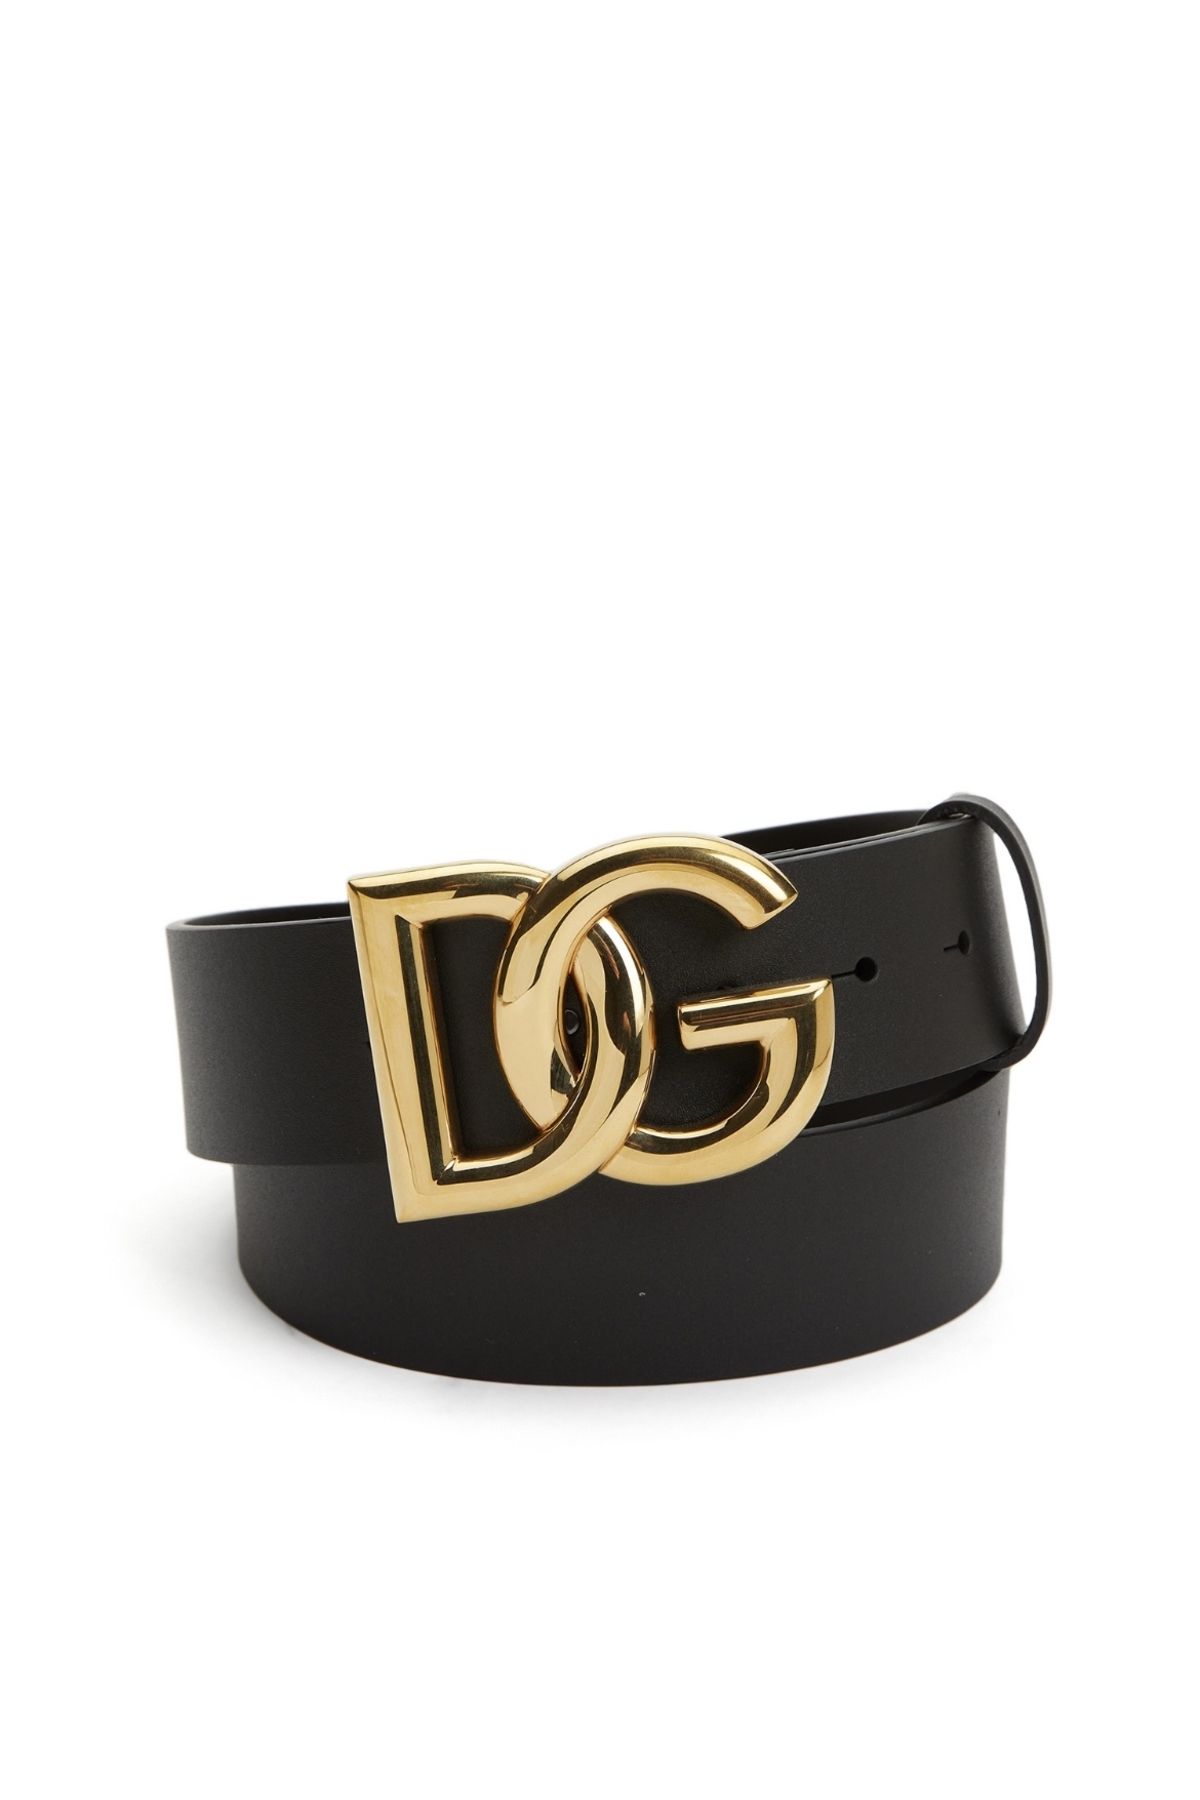 Dolce&Gabbana DG logo calf leather belt